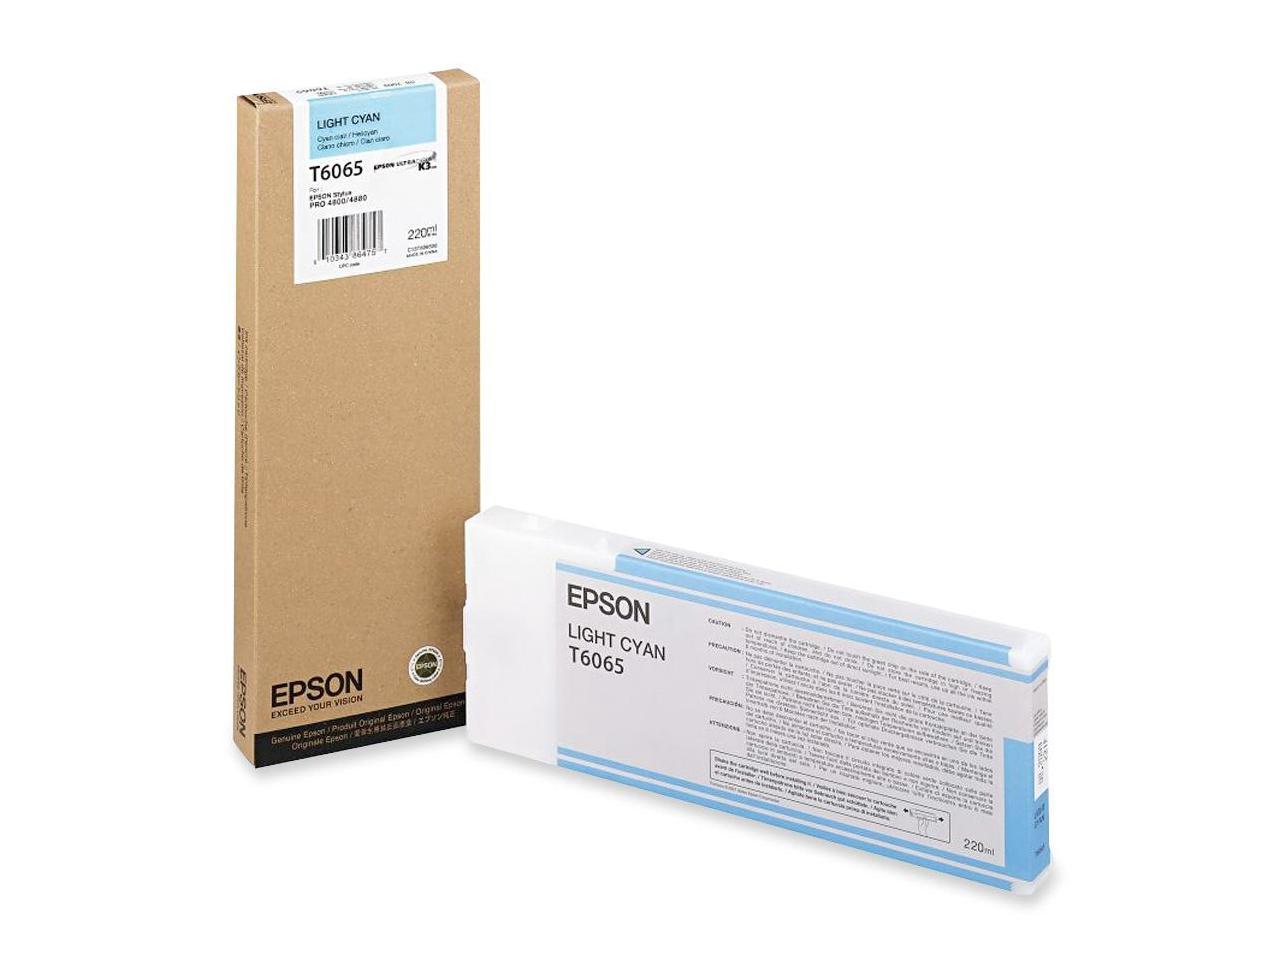 EPSON T606500 220 ml UltraChrome Ink Cartridge Light Cyan